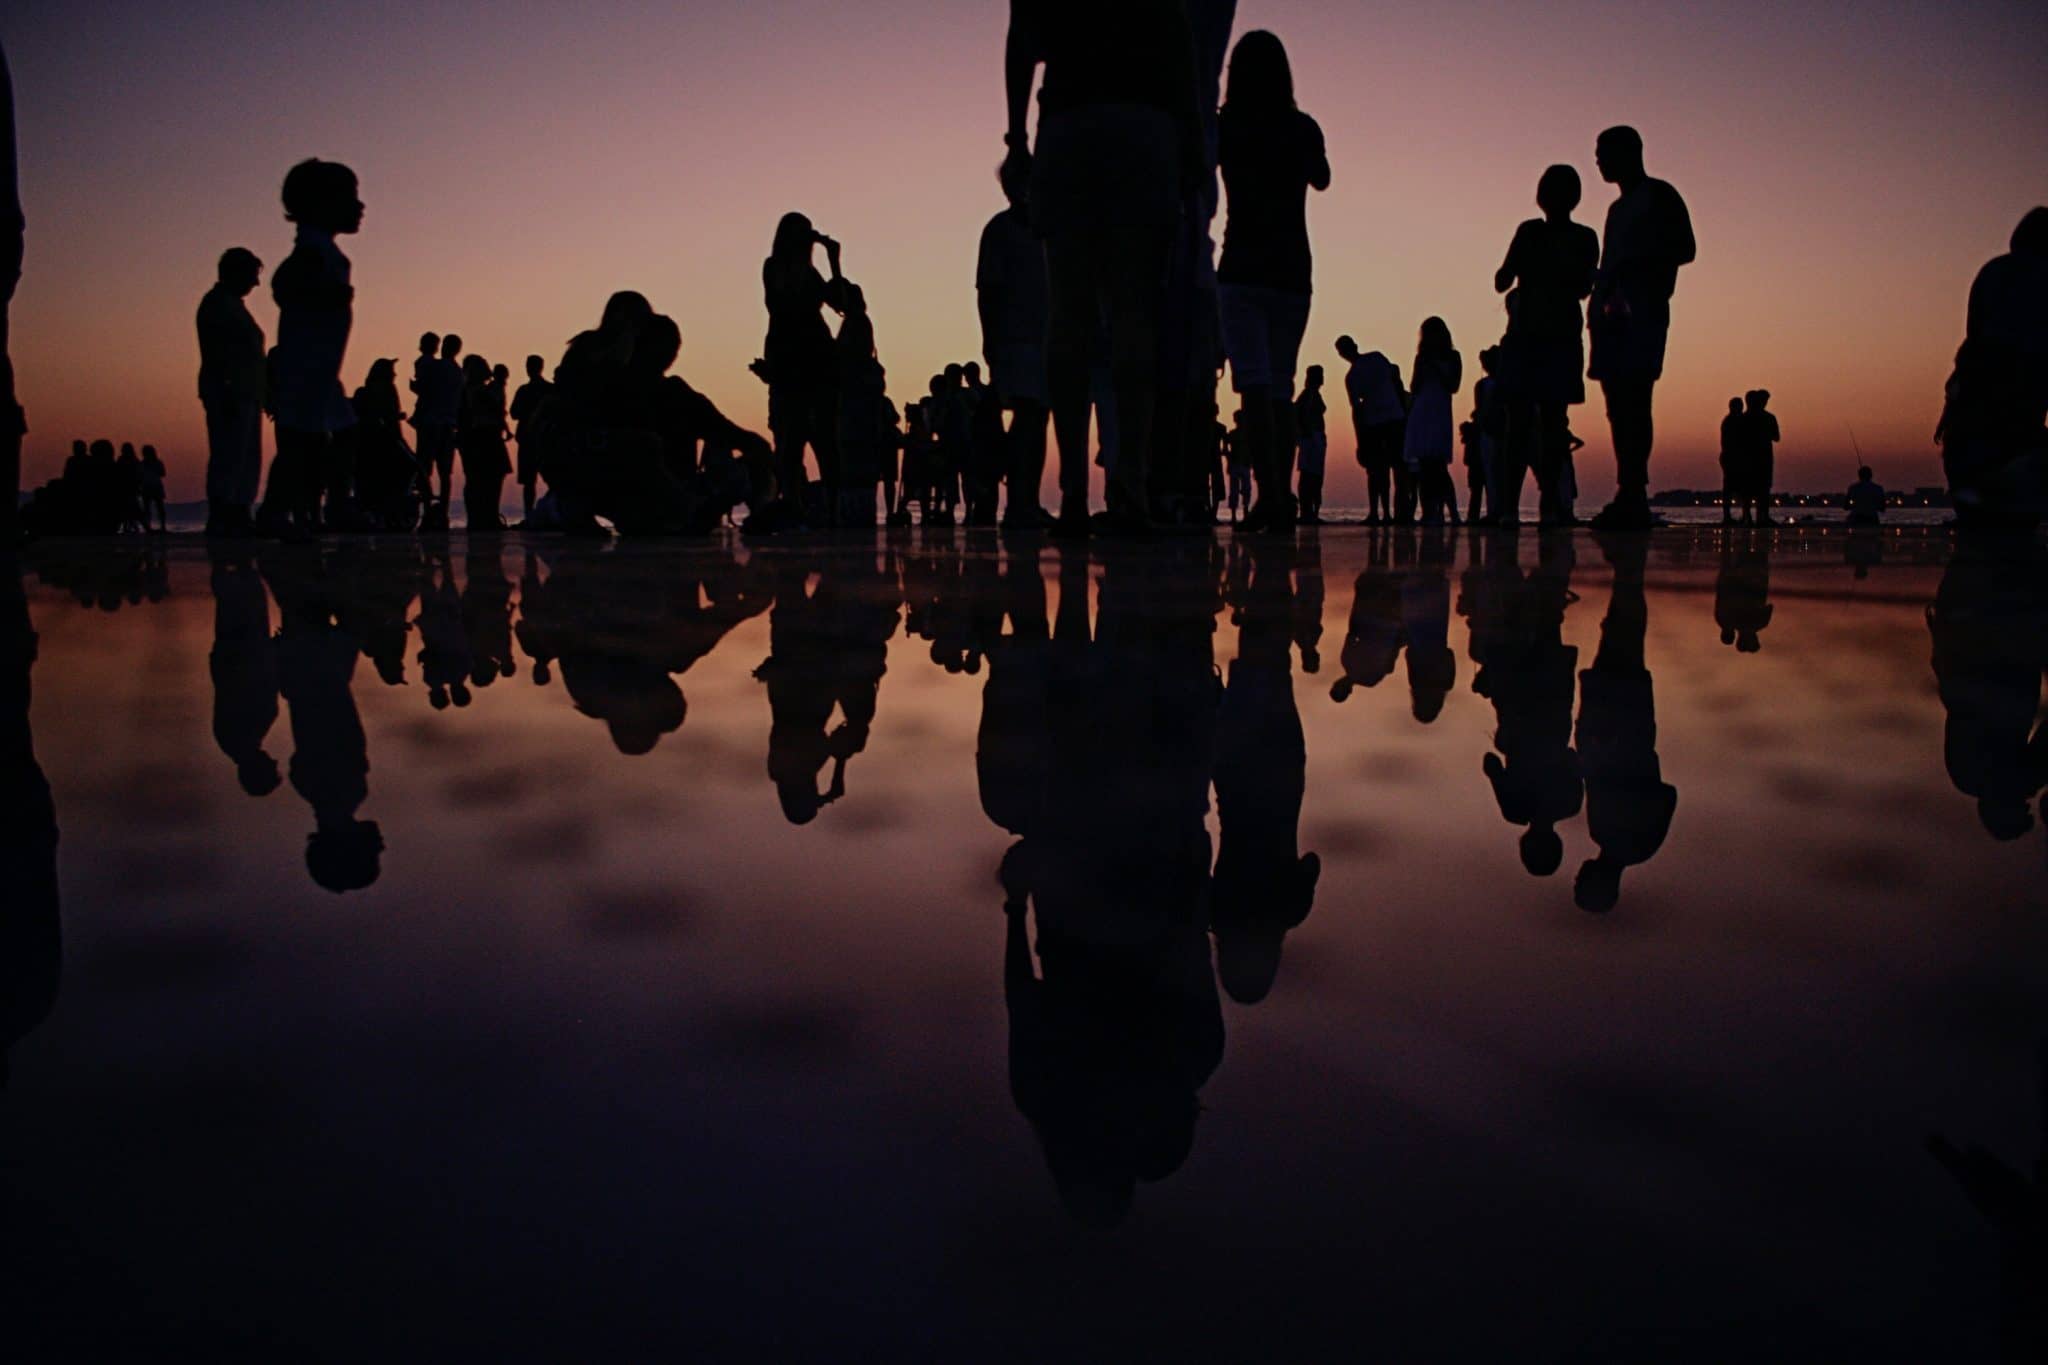 People standing on a shoreline in dark silhouette